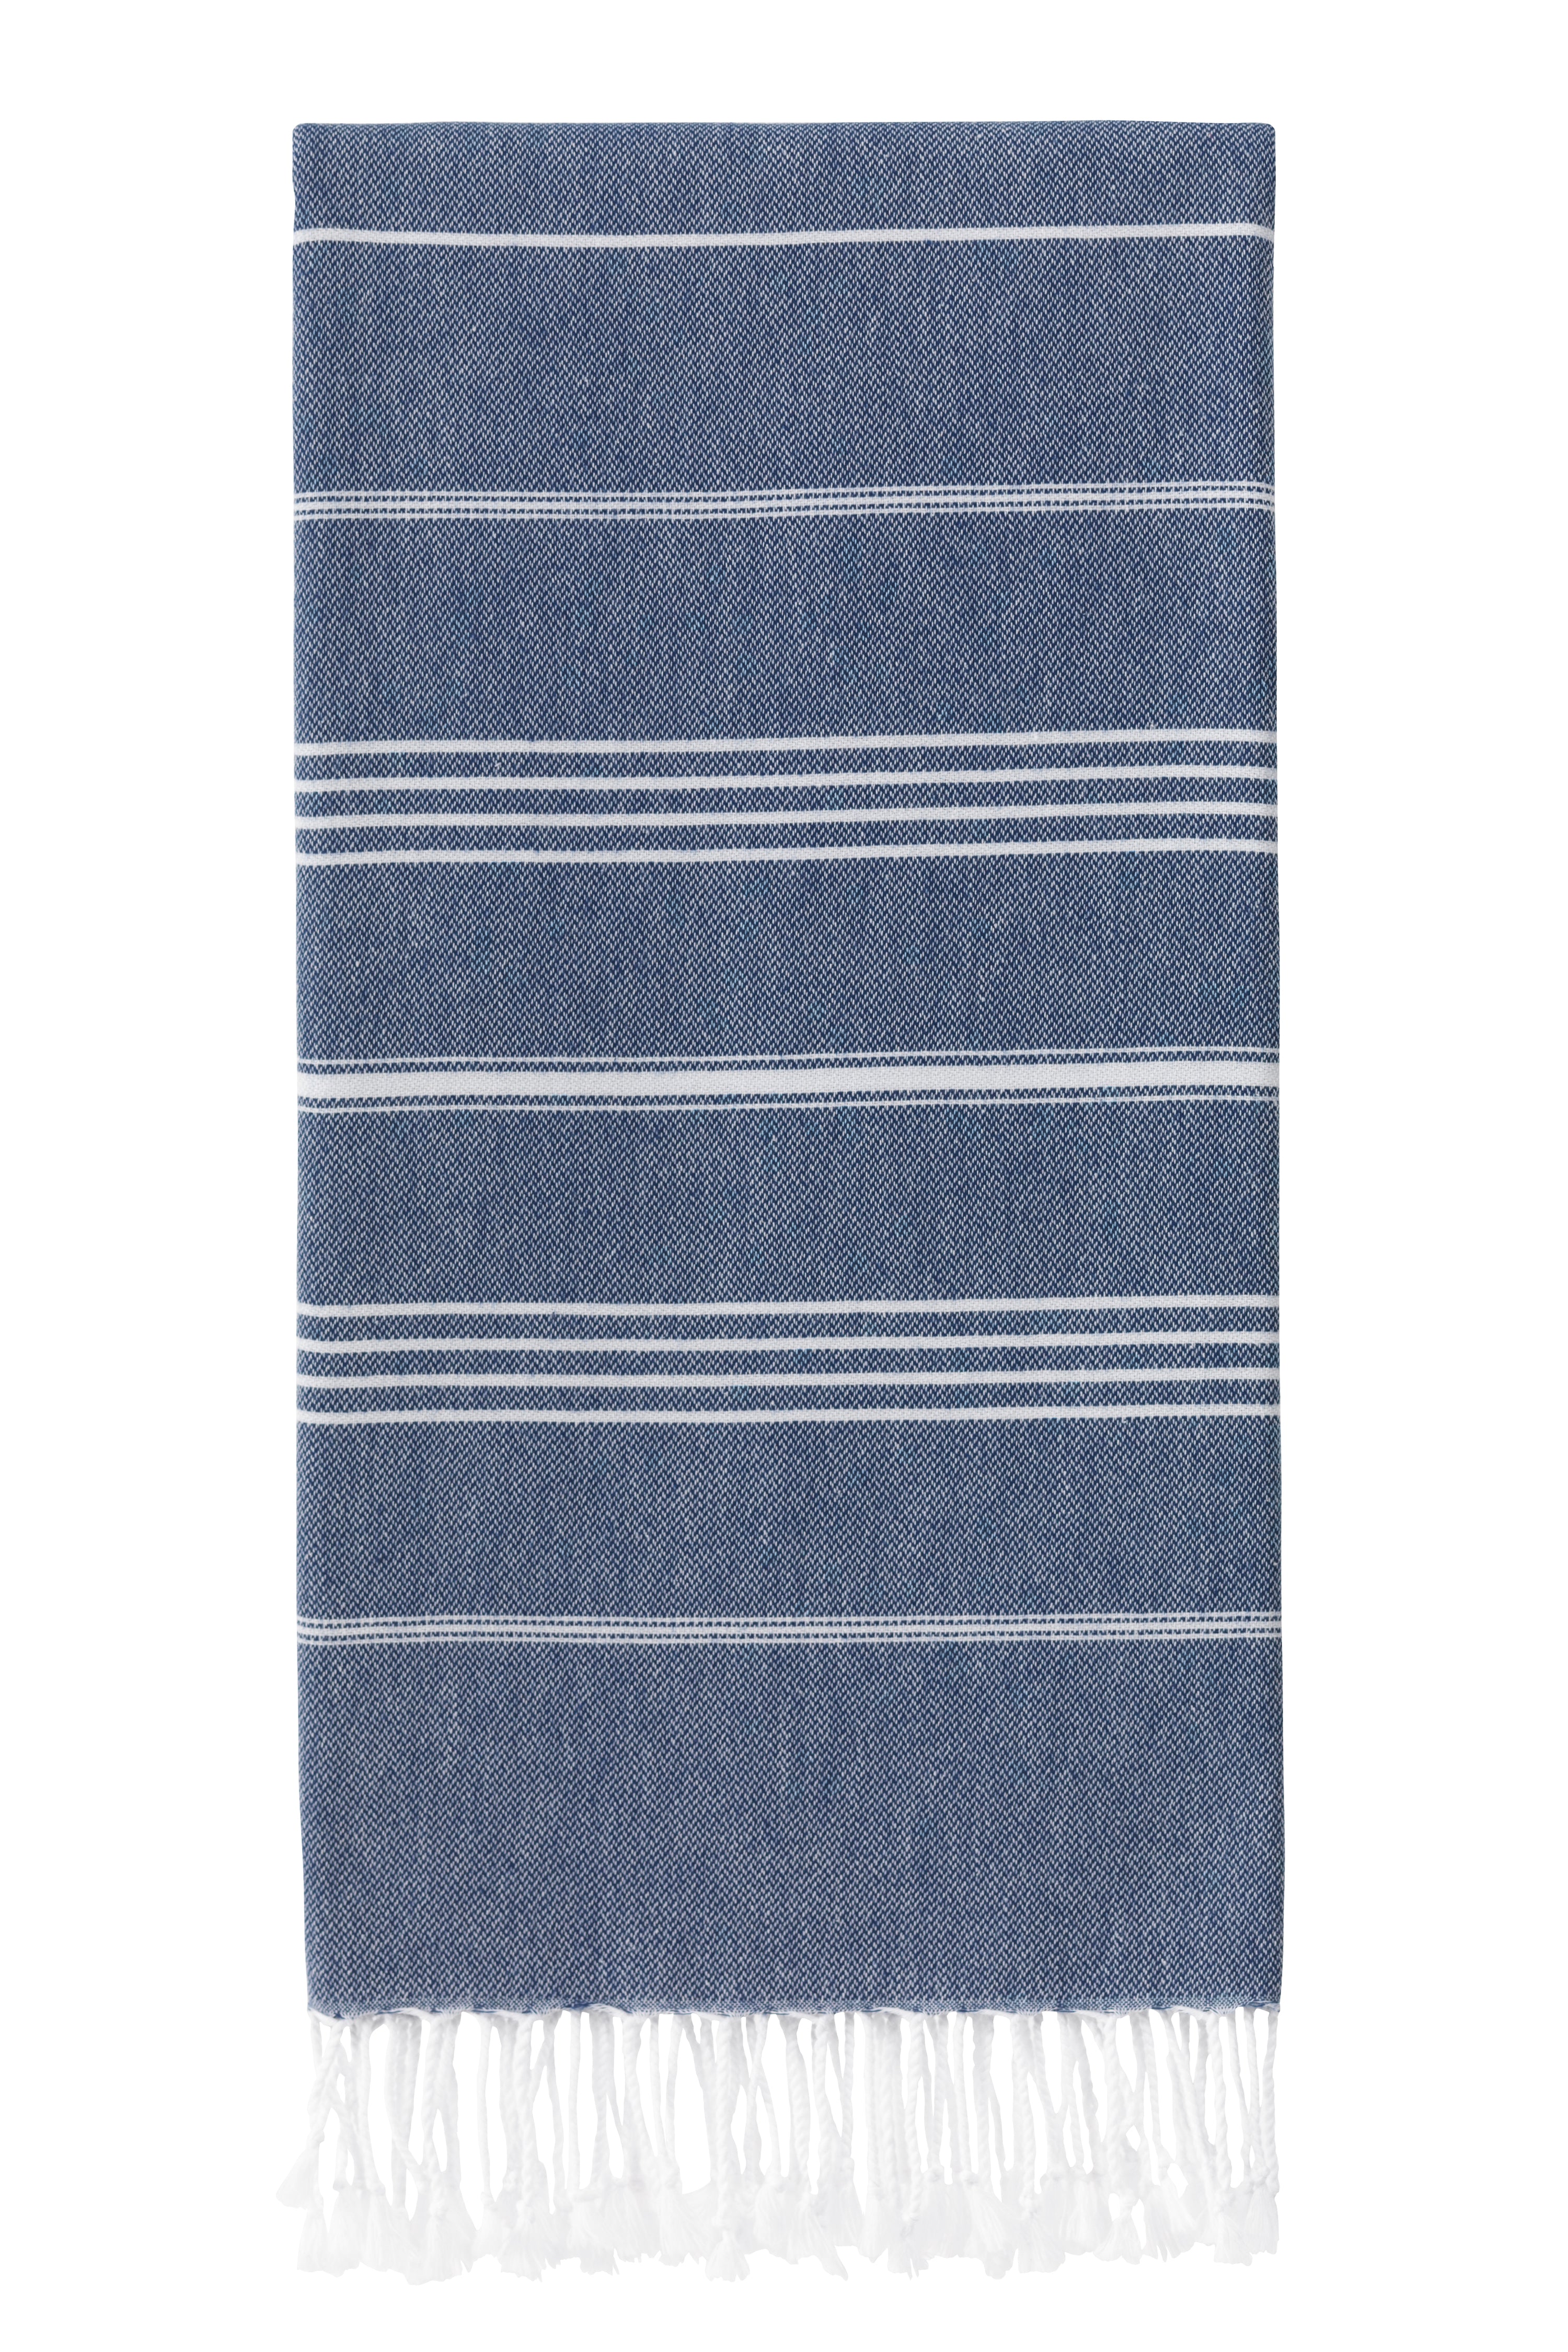 Turkish Cotton Beach Towel, Bath Towels for Bathroom - Wear Sierra Navy